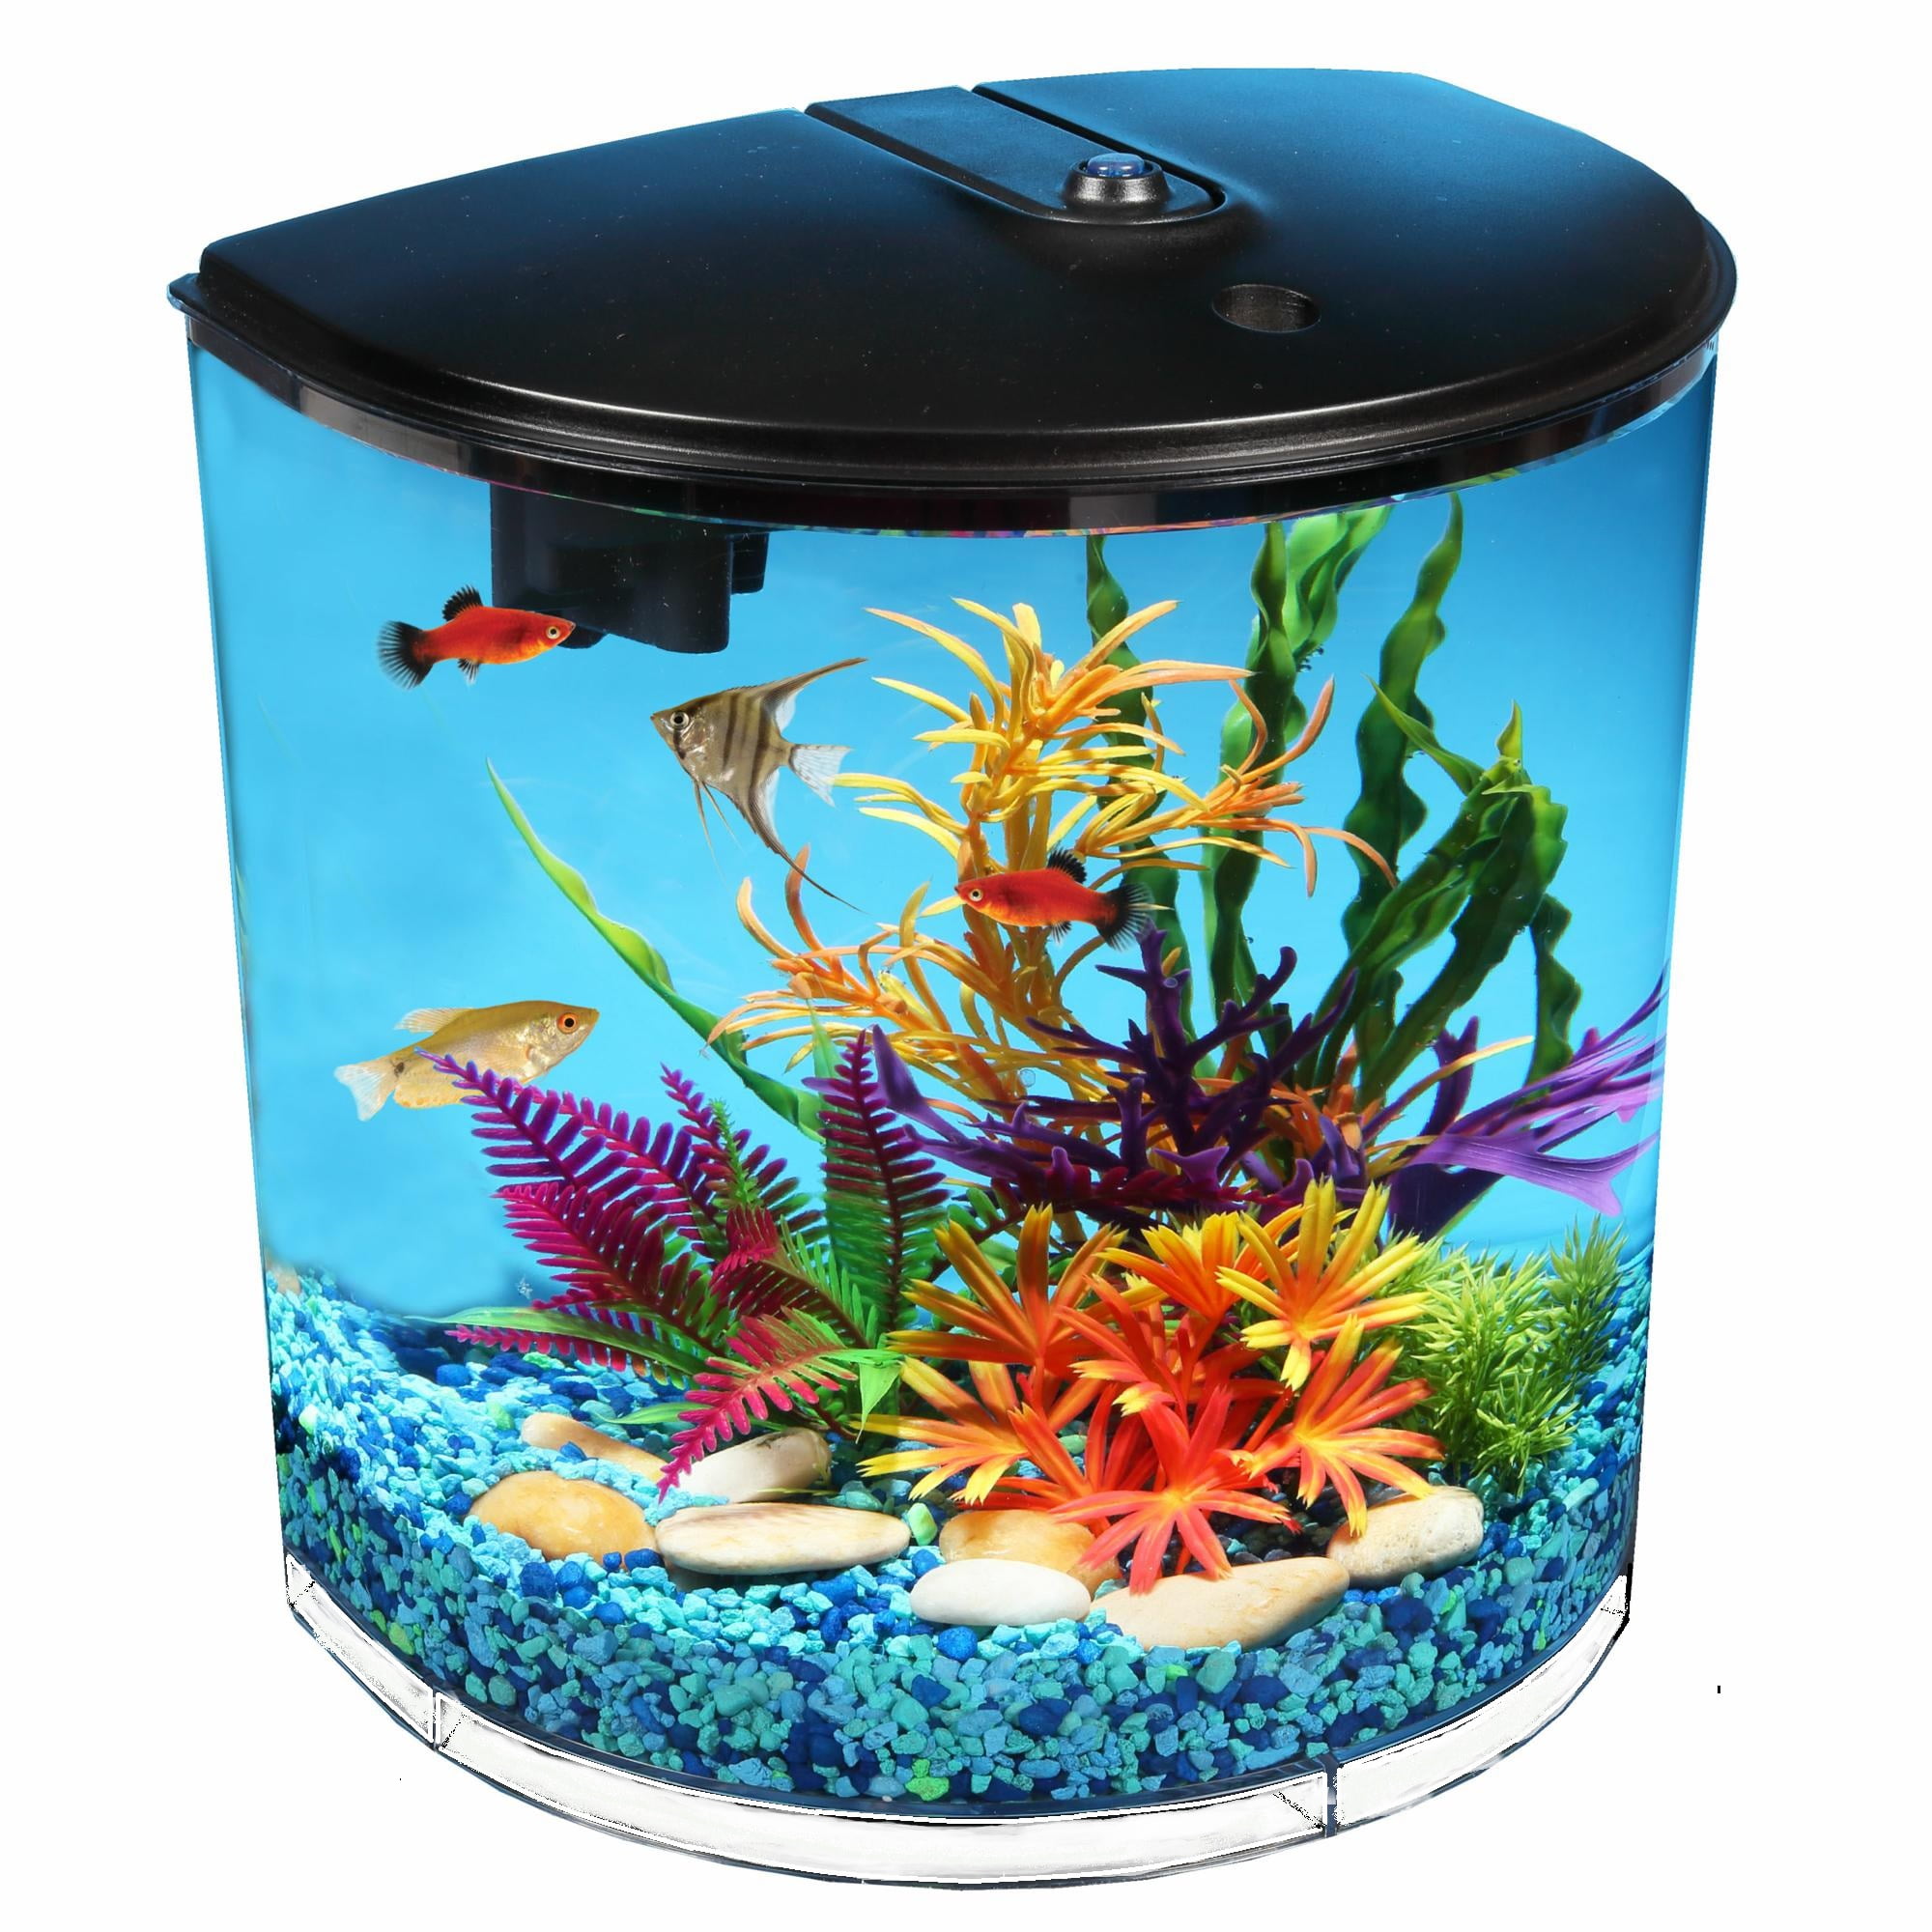 Aqua Culture One Gallon Aquarium Starter Kit with LED Light and 